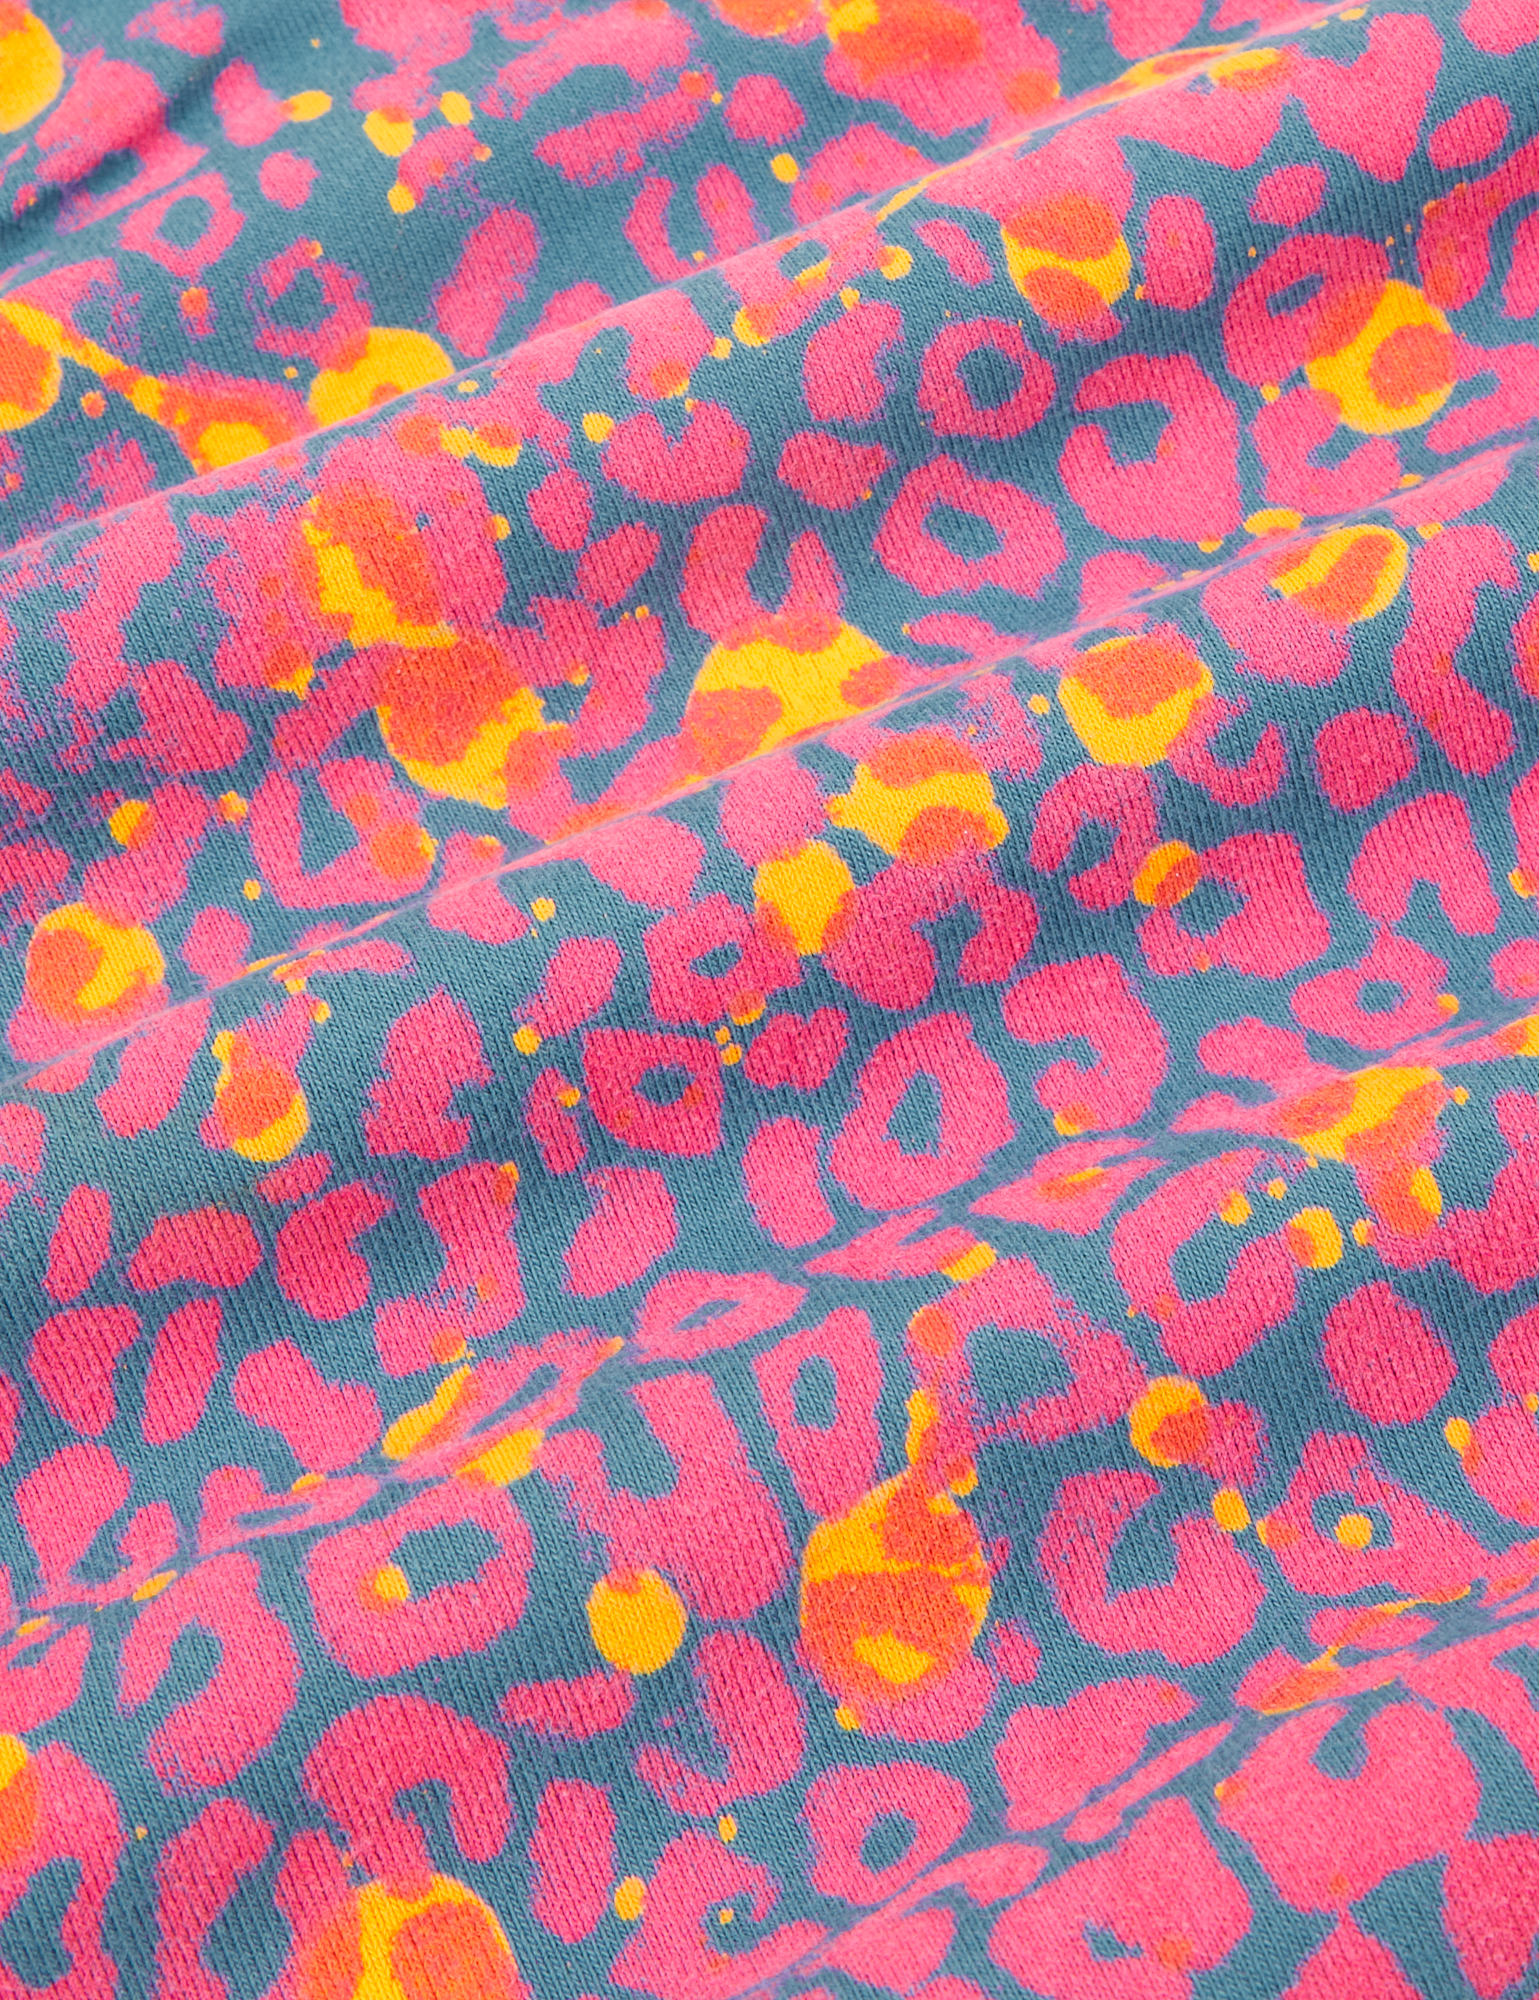 Cami in Electric Leopard fabric detail close up